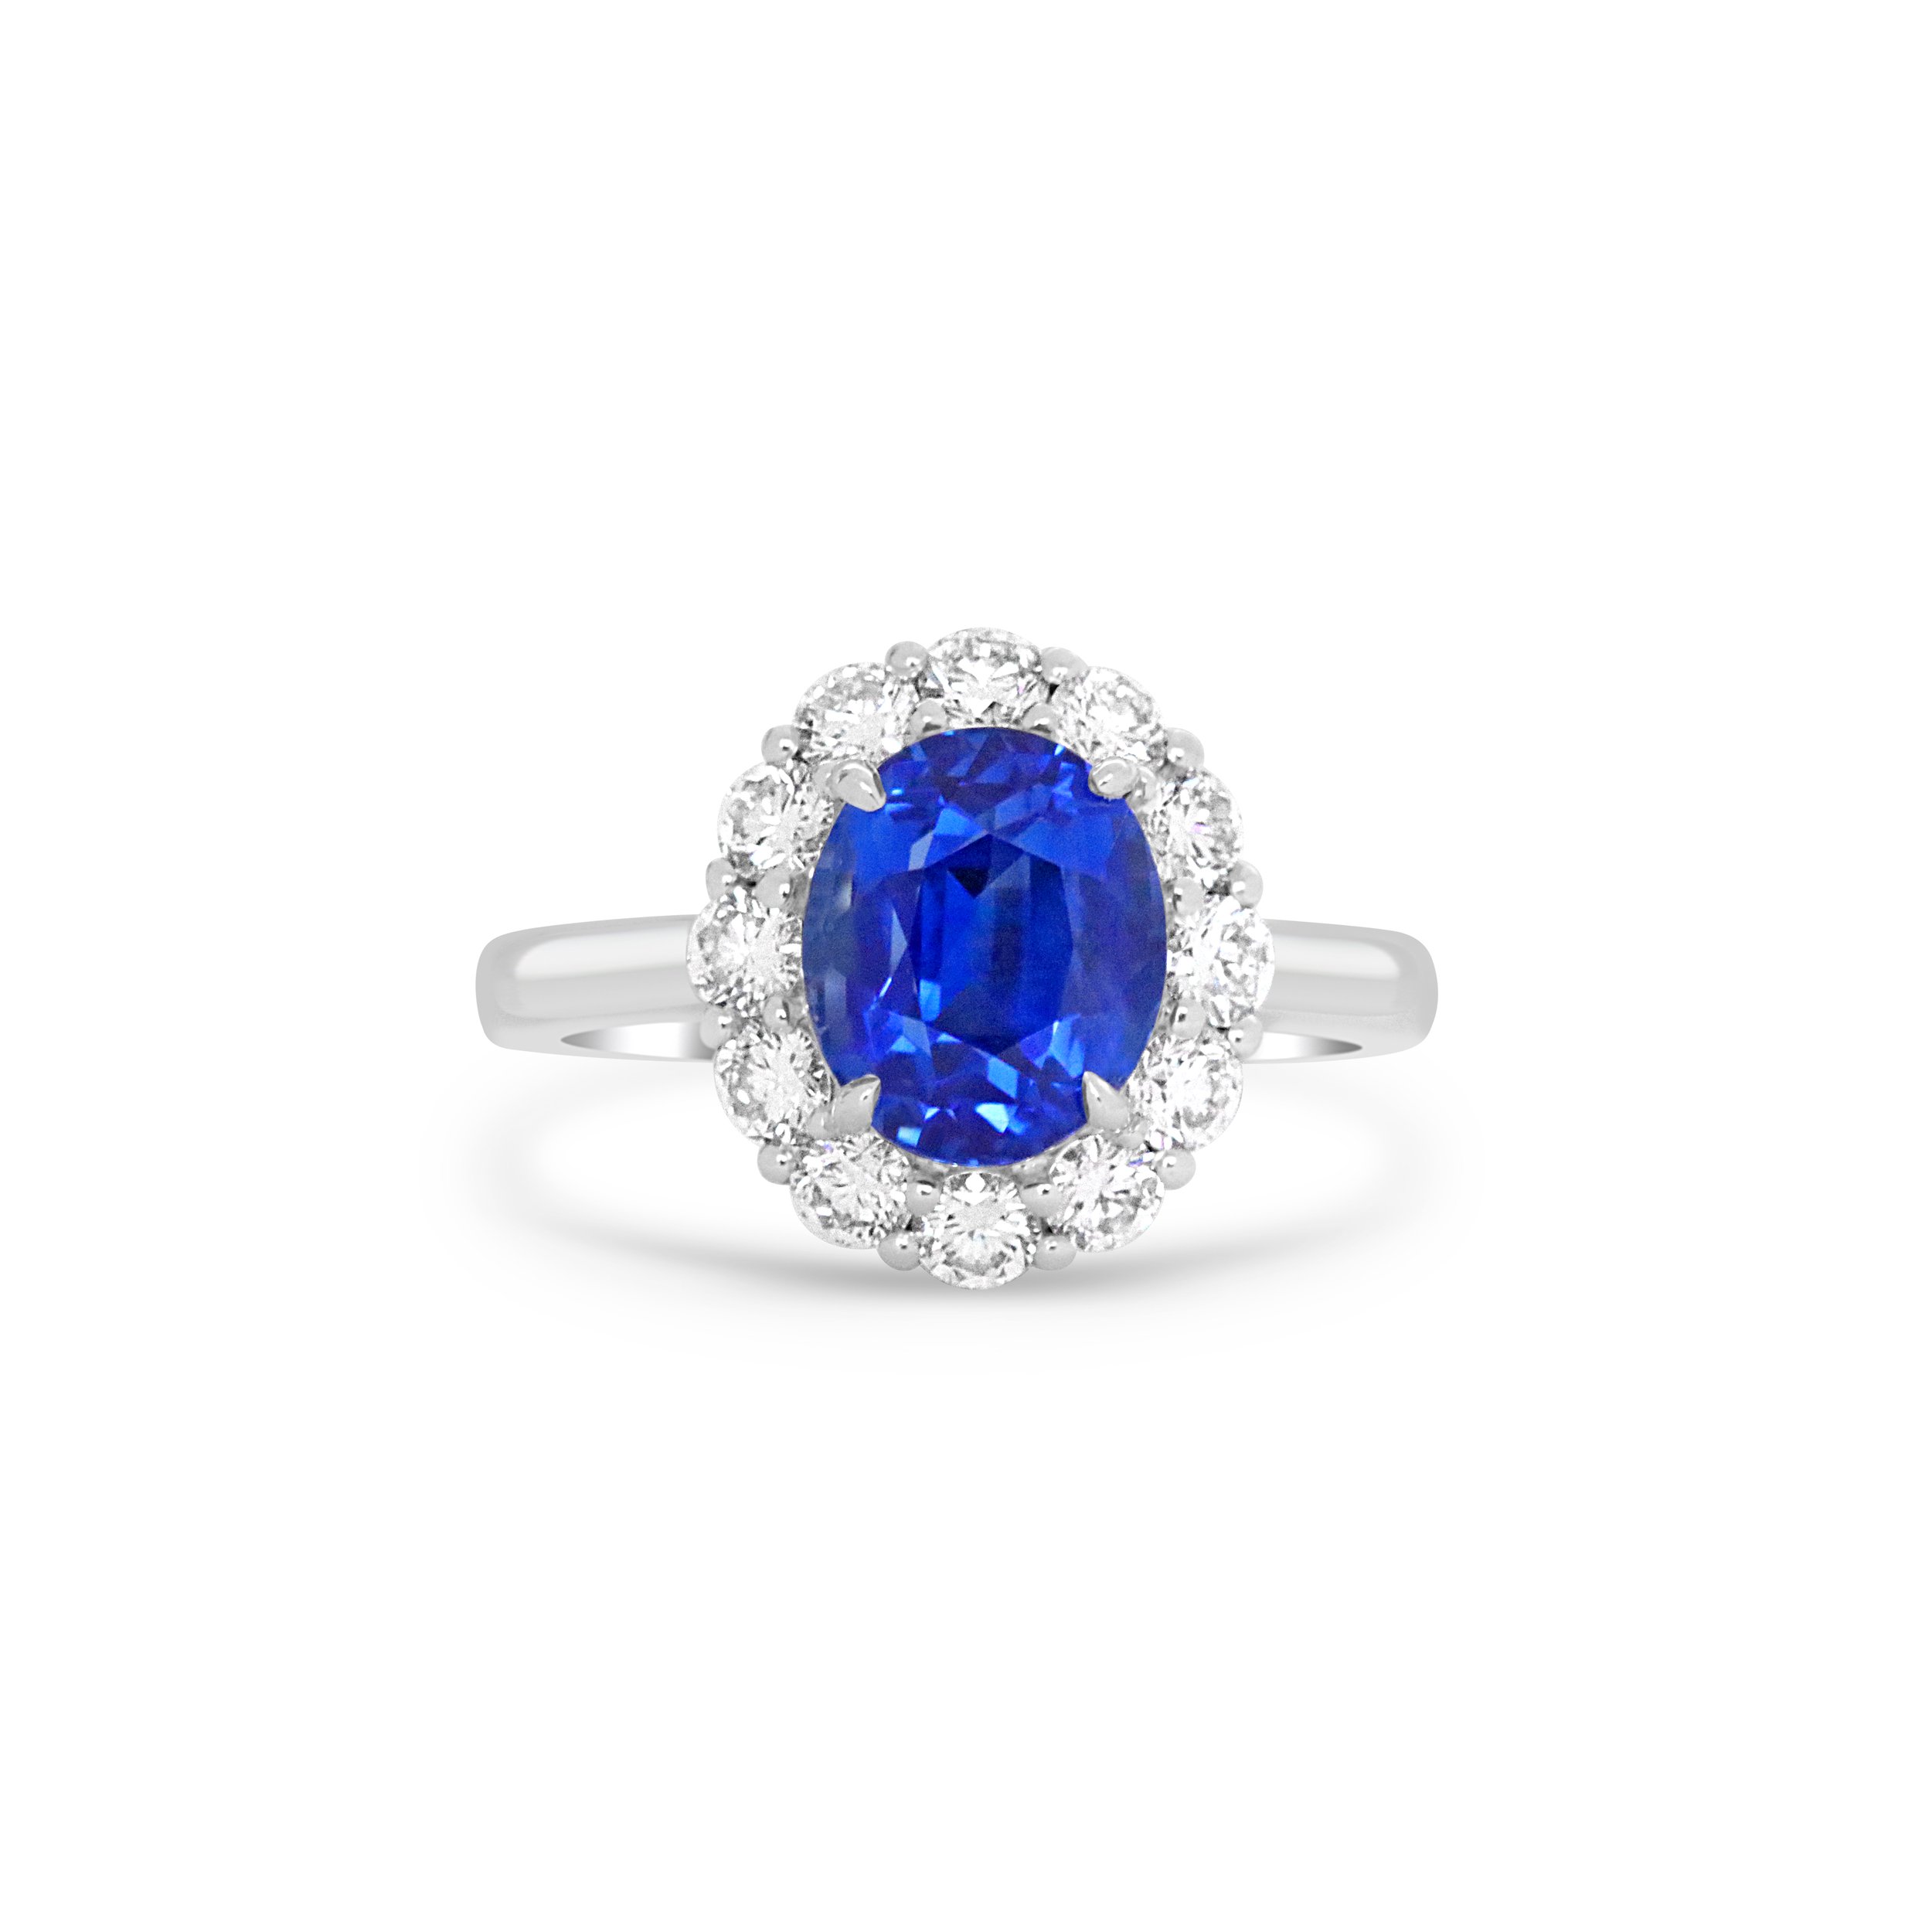 A 3.20 ct Unheated Ceylon Sapphire Ring.jpg